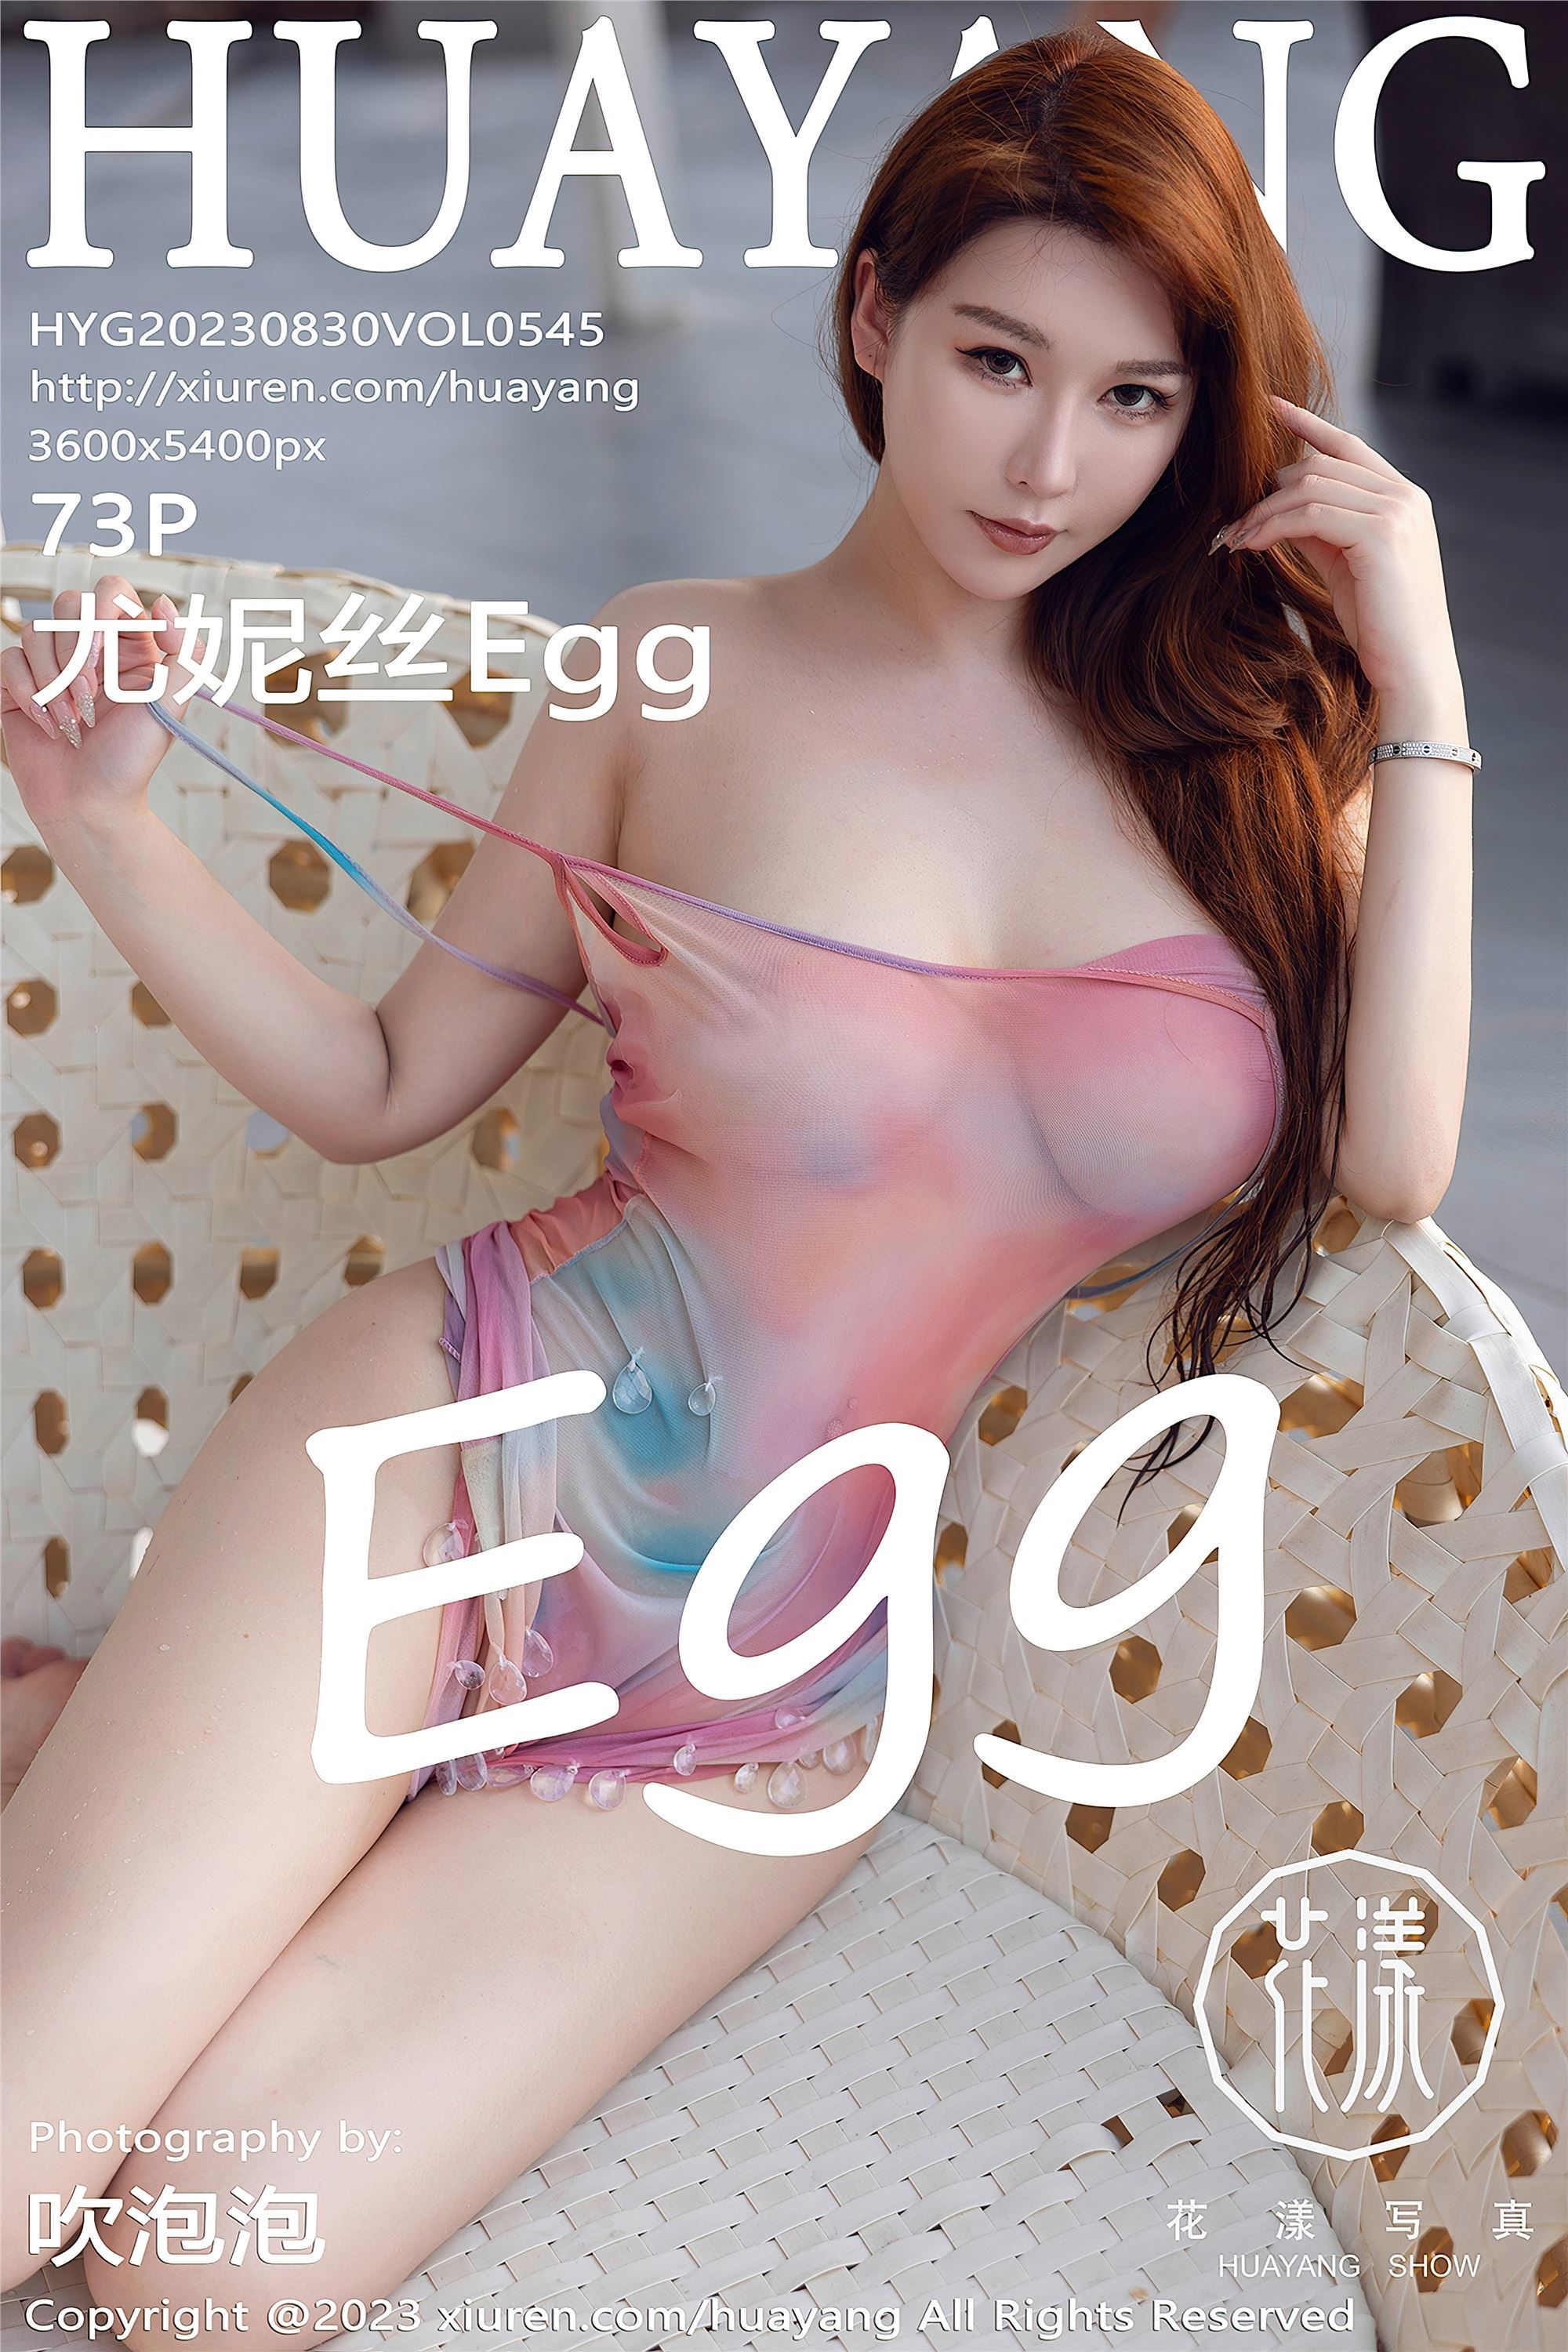 HuaYang Hua Yang show August 30, 2023 VOL.545 Eunice Egg